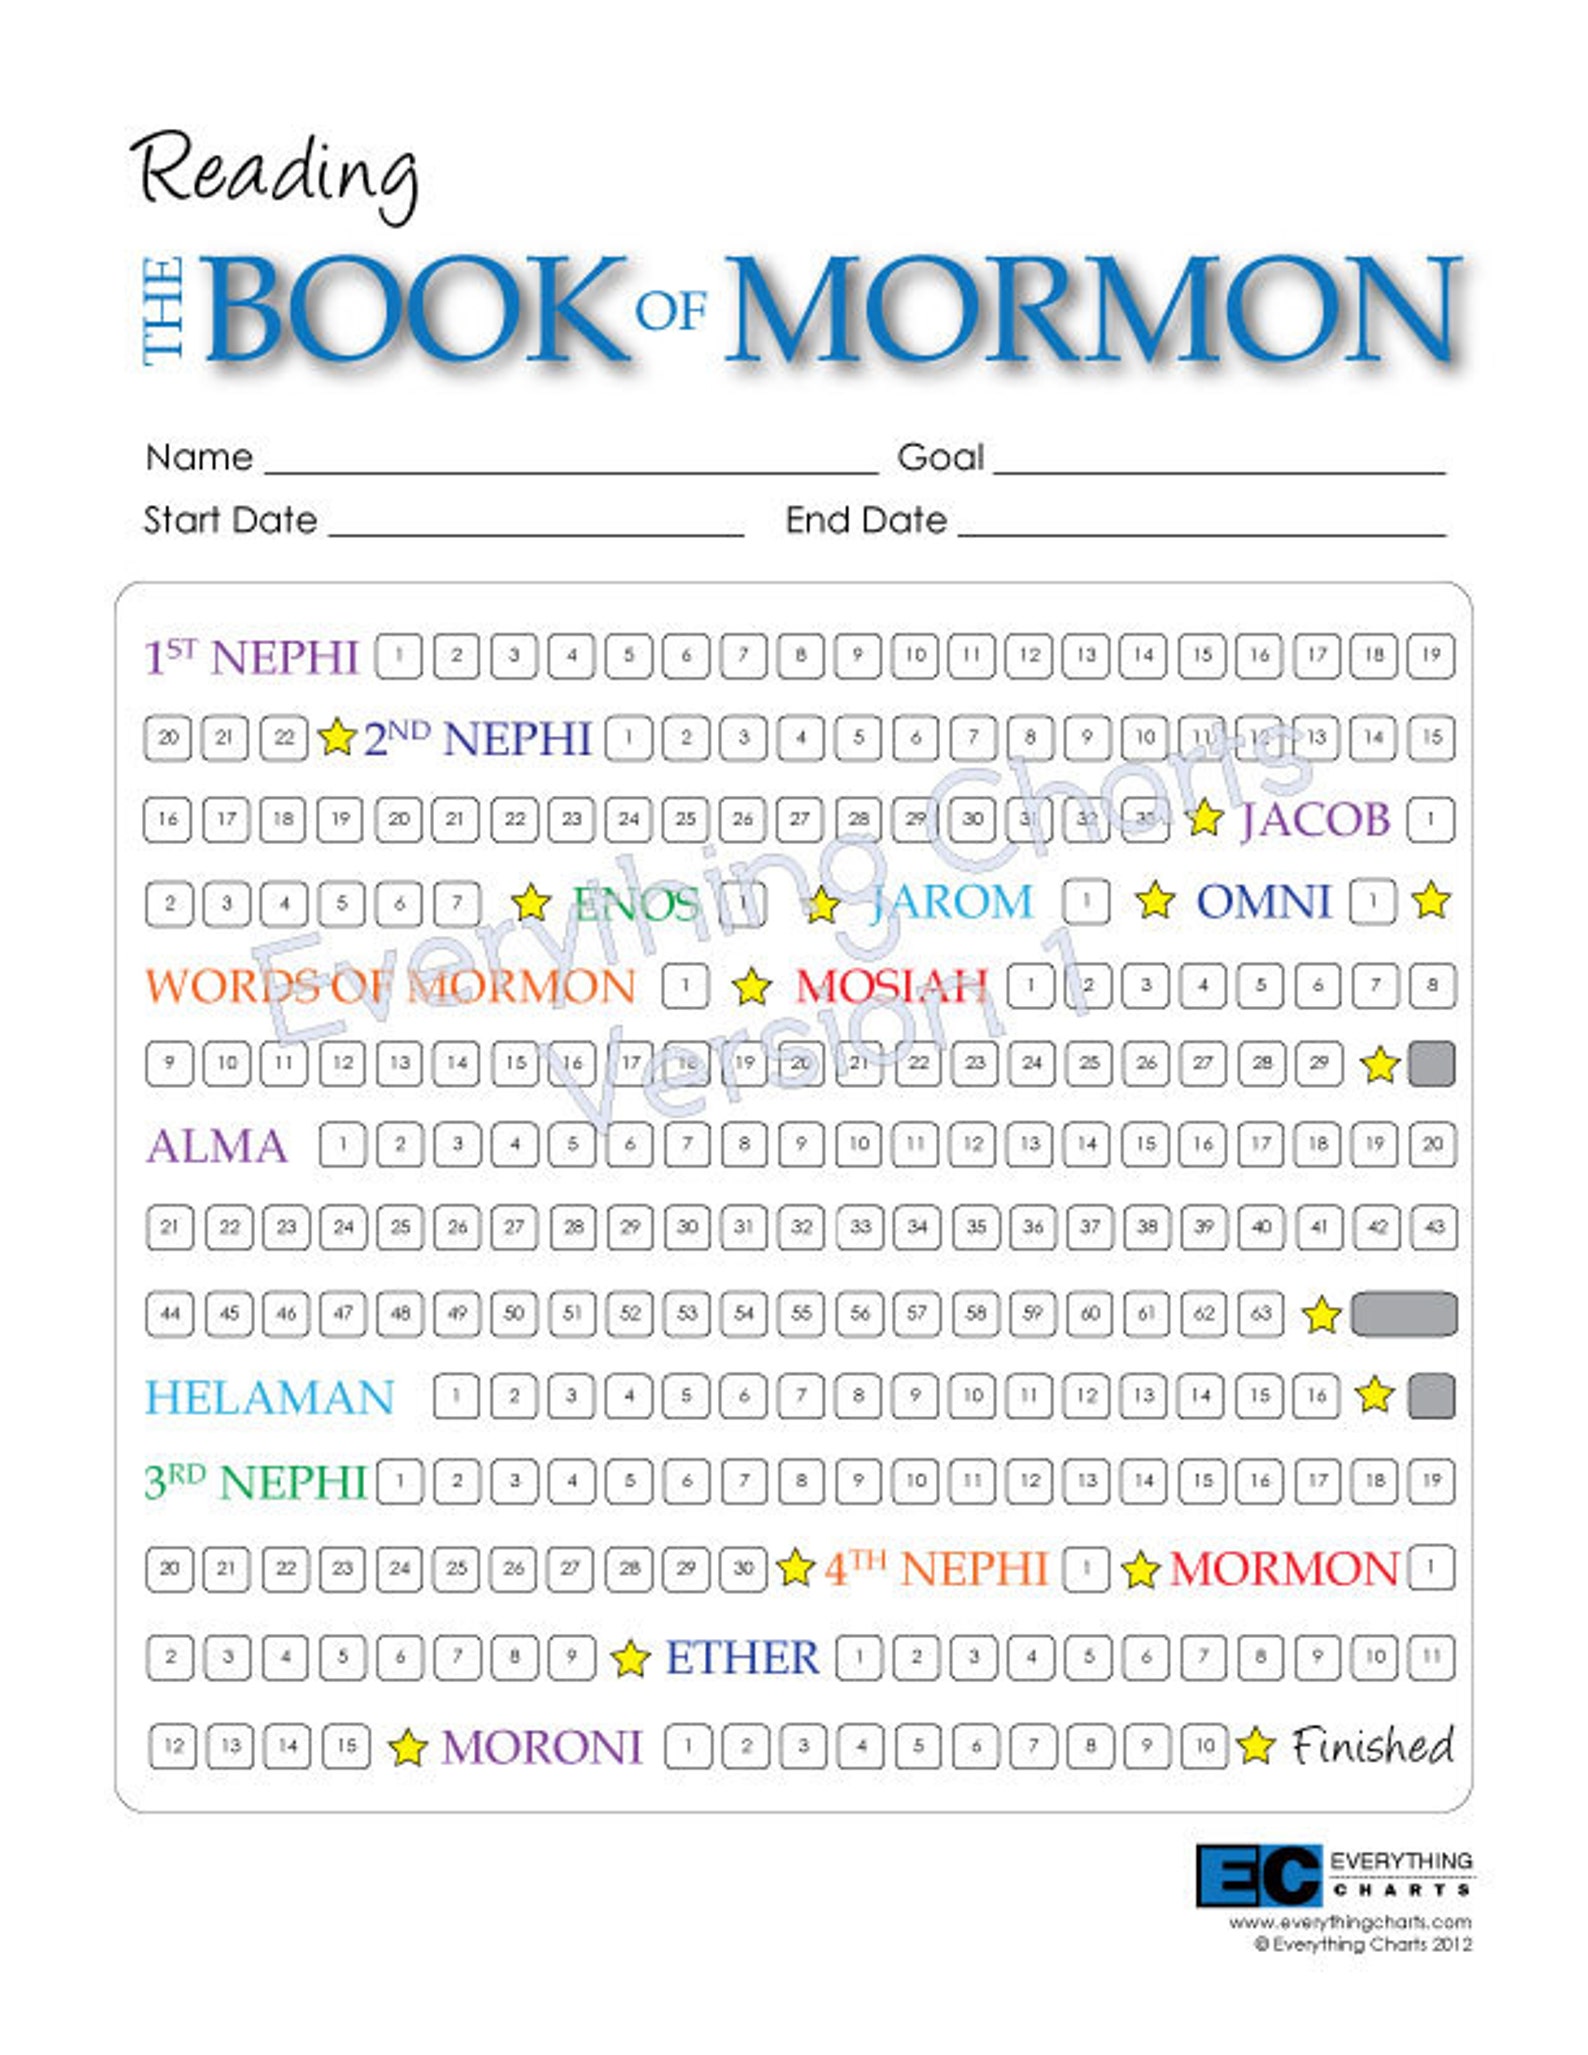 book-of-mormon-reading-chart-pdf-file-printable-etsy